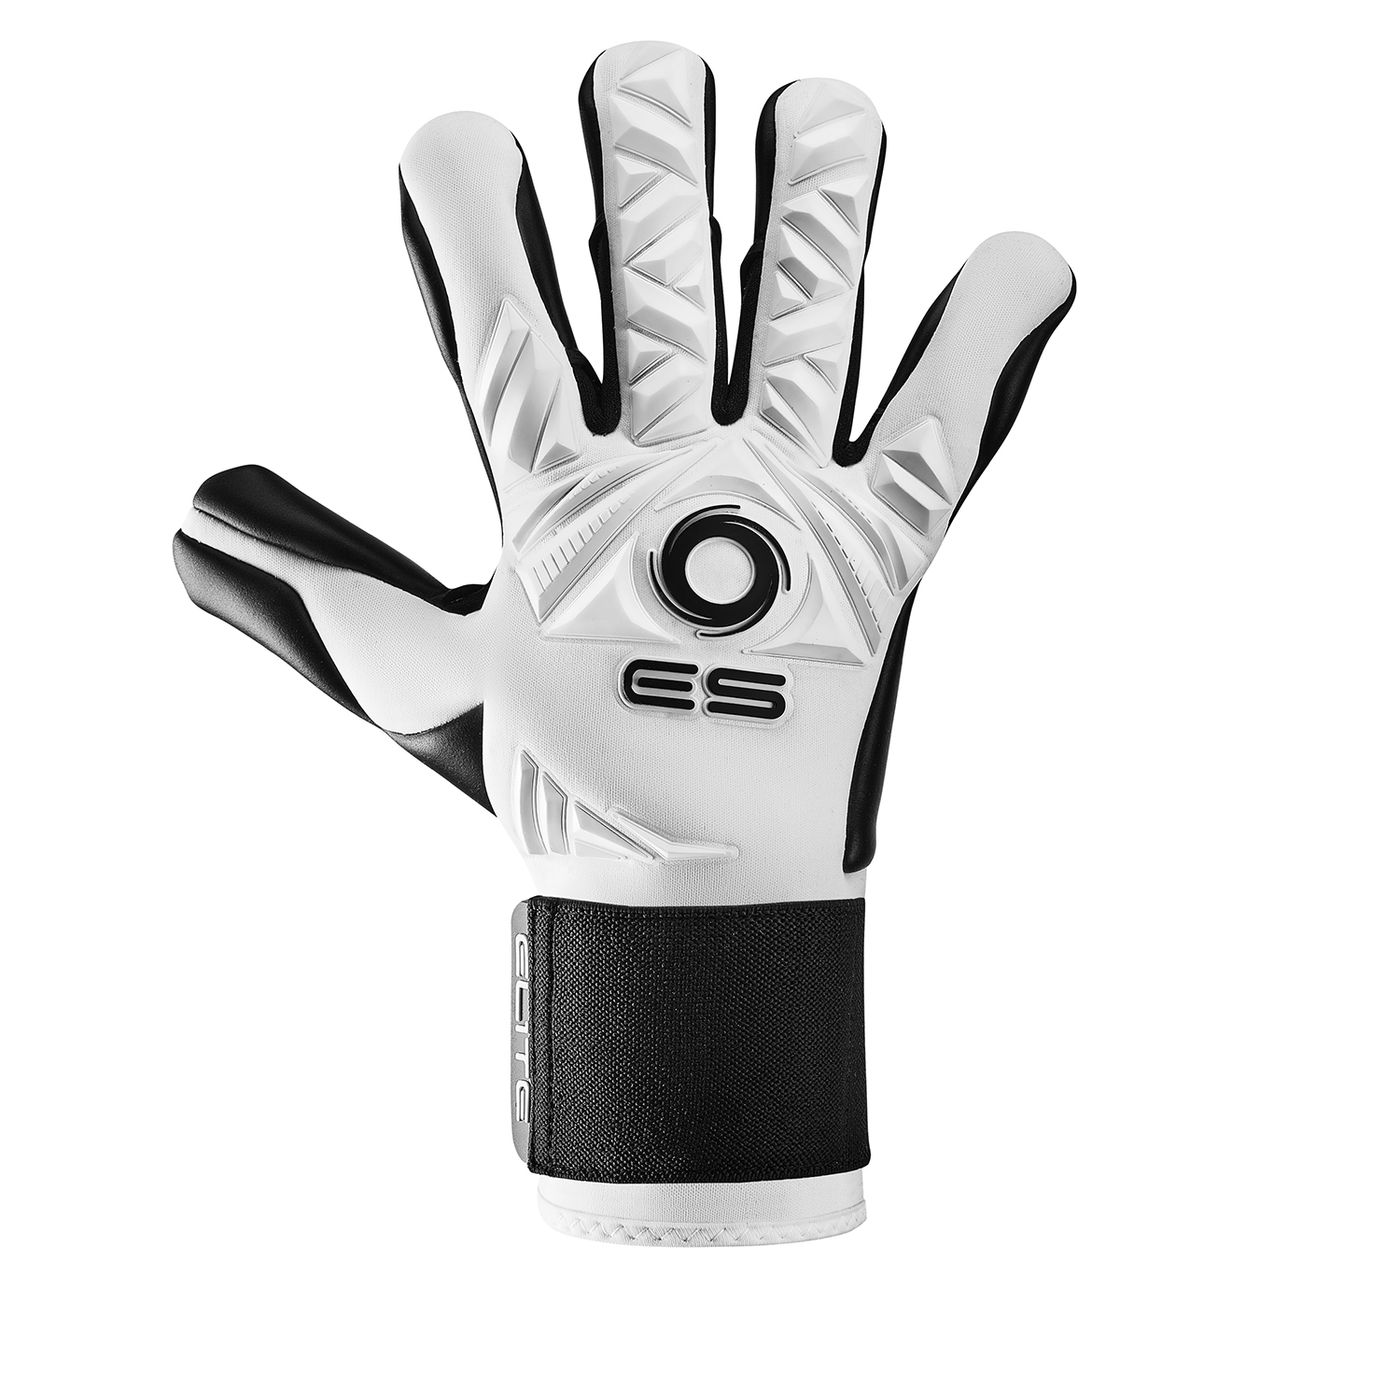 Вратарские перчатки Elite Sport REVOLUTION II Combi White купить